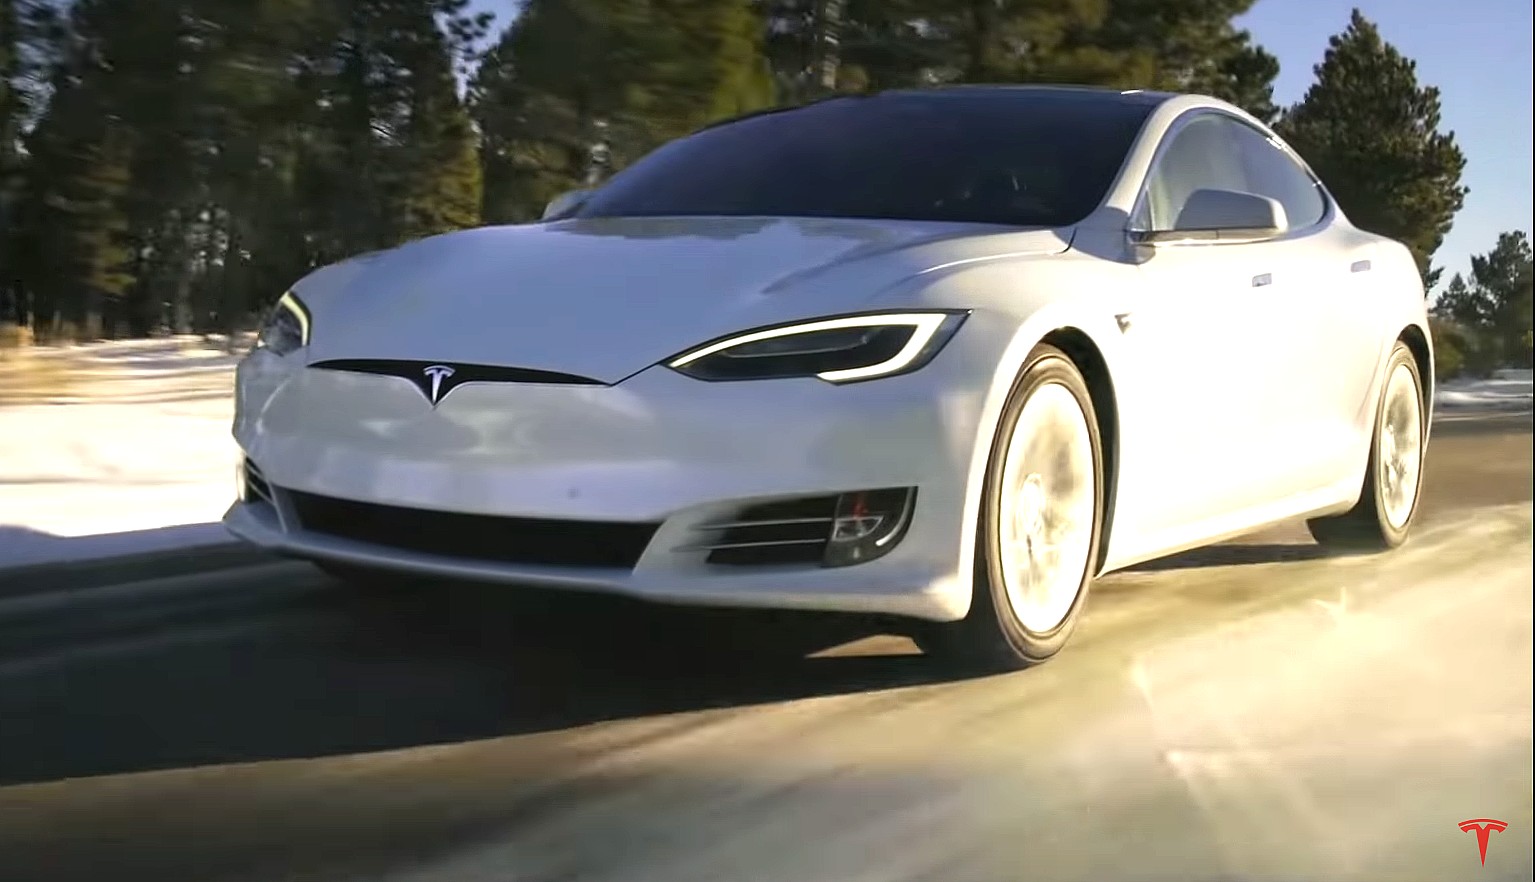 Tesla Model S hits milestone in Norway with 20k total registrations